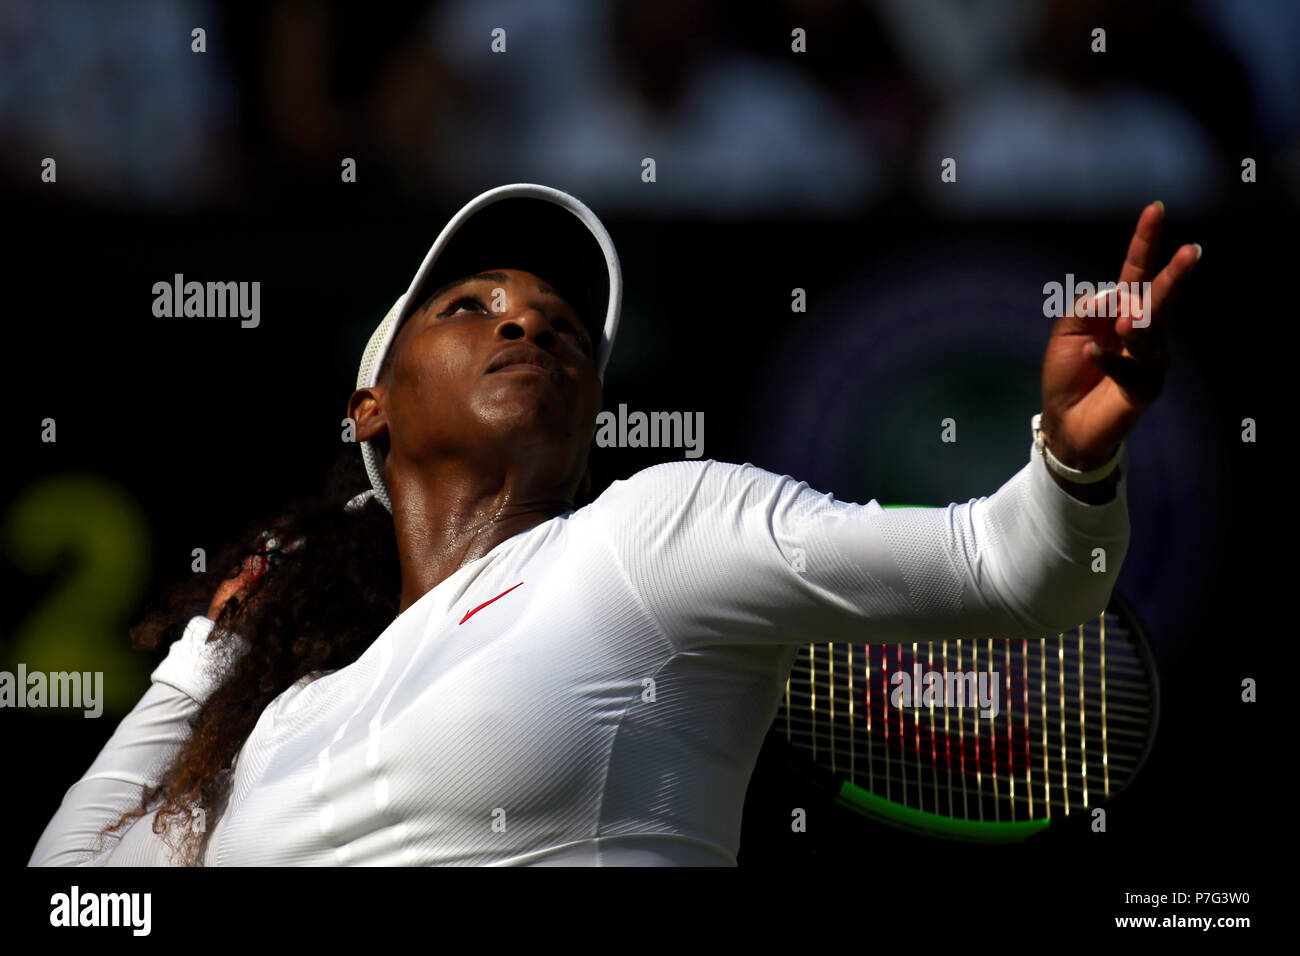 Serena williams jugando en wimbledon e imágenes de alta resolución - Alamy